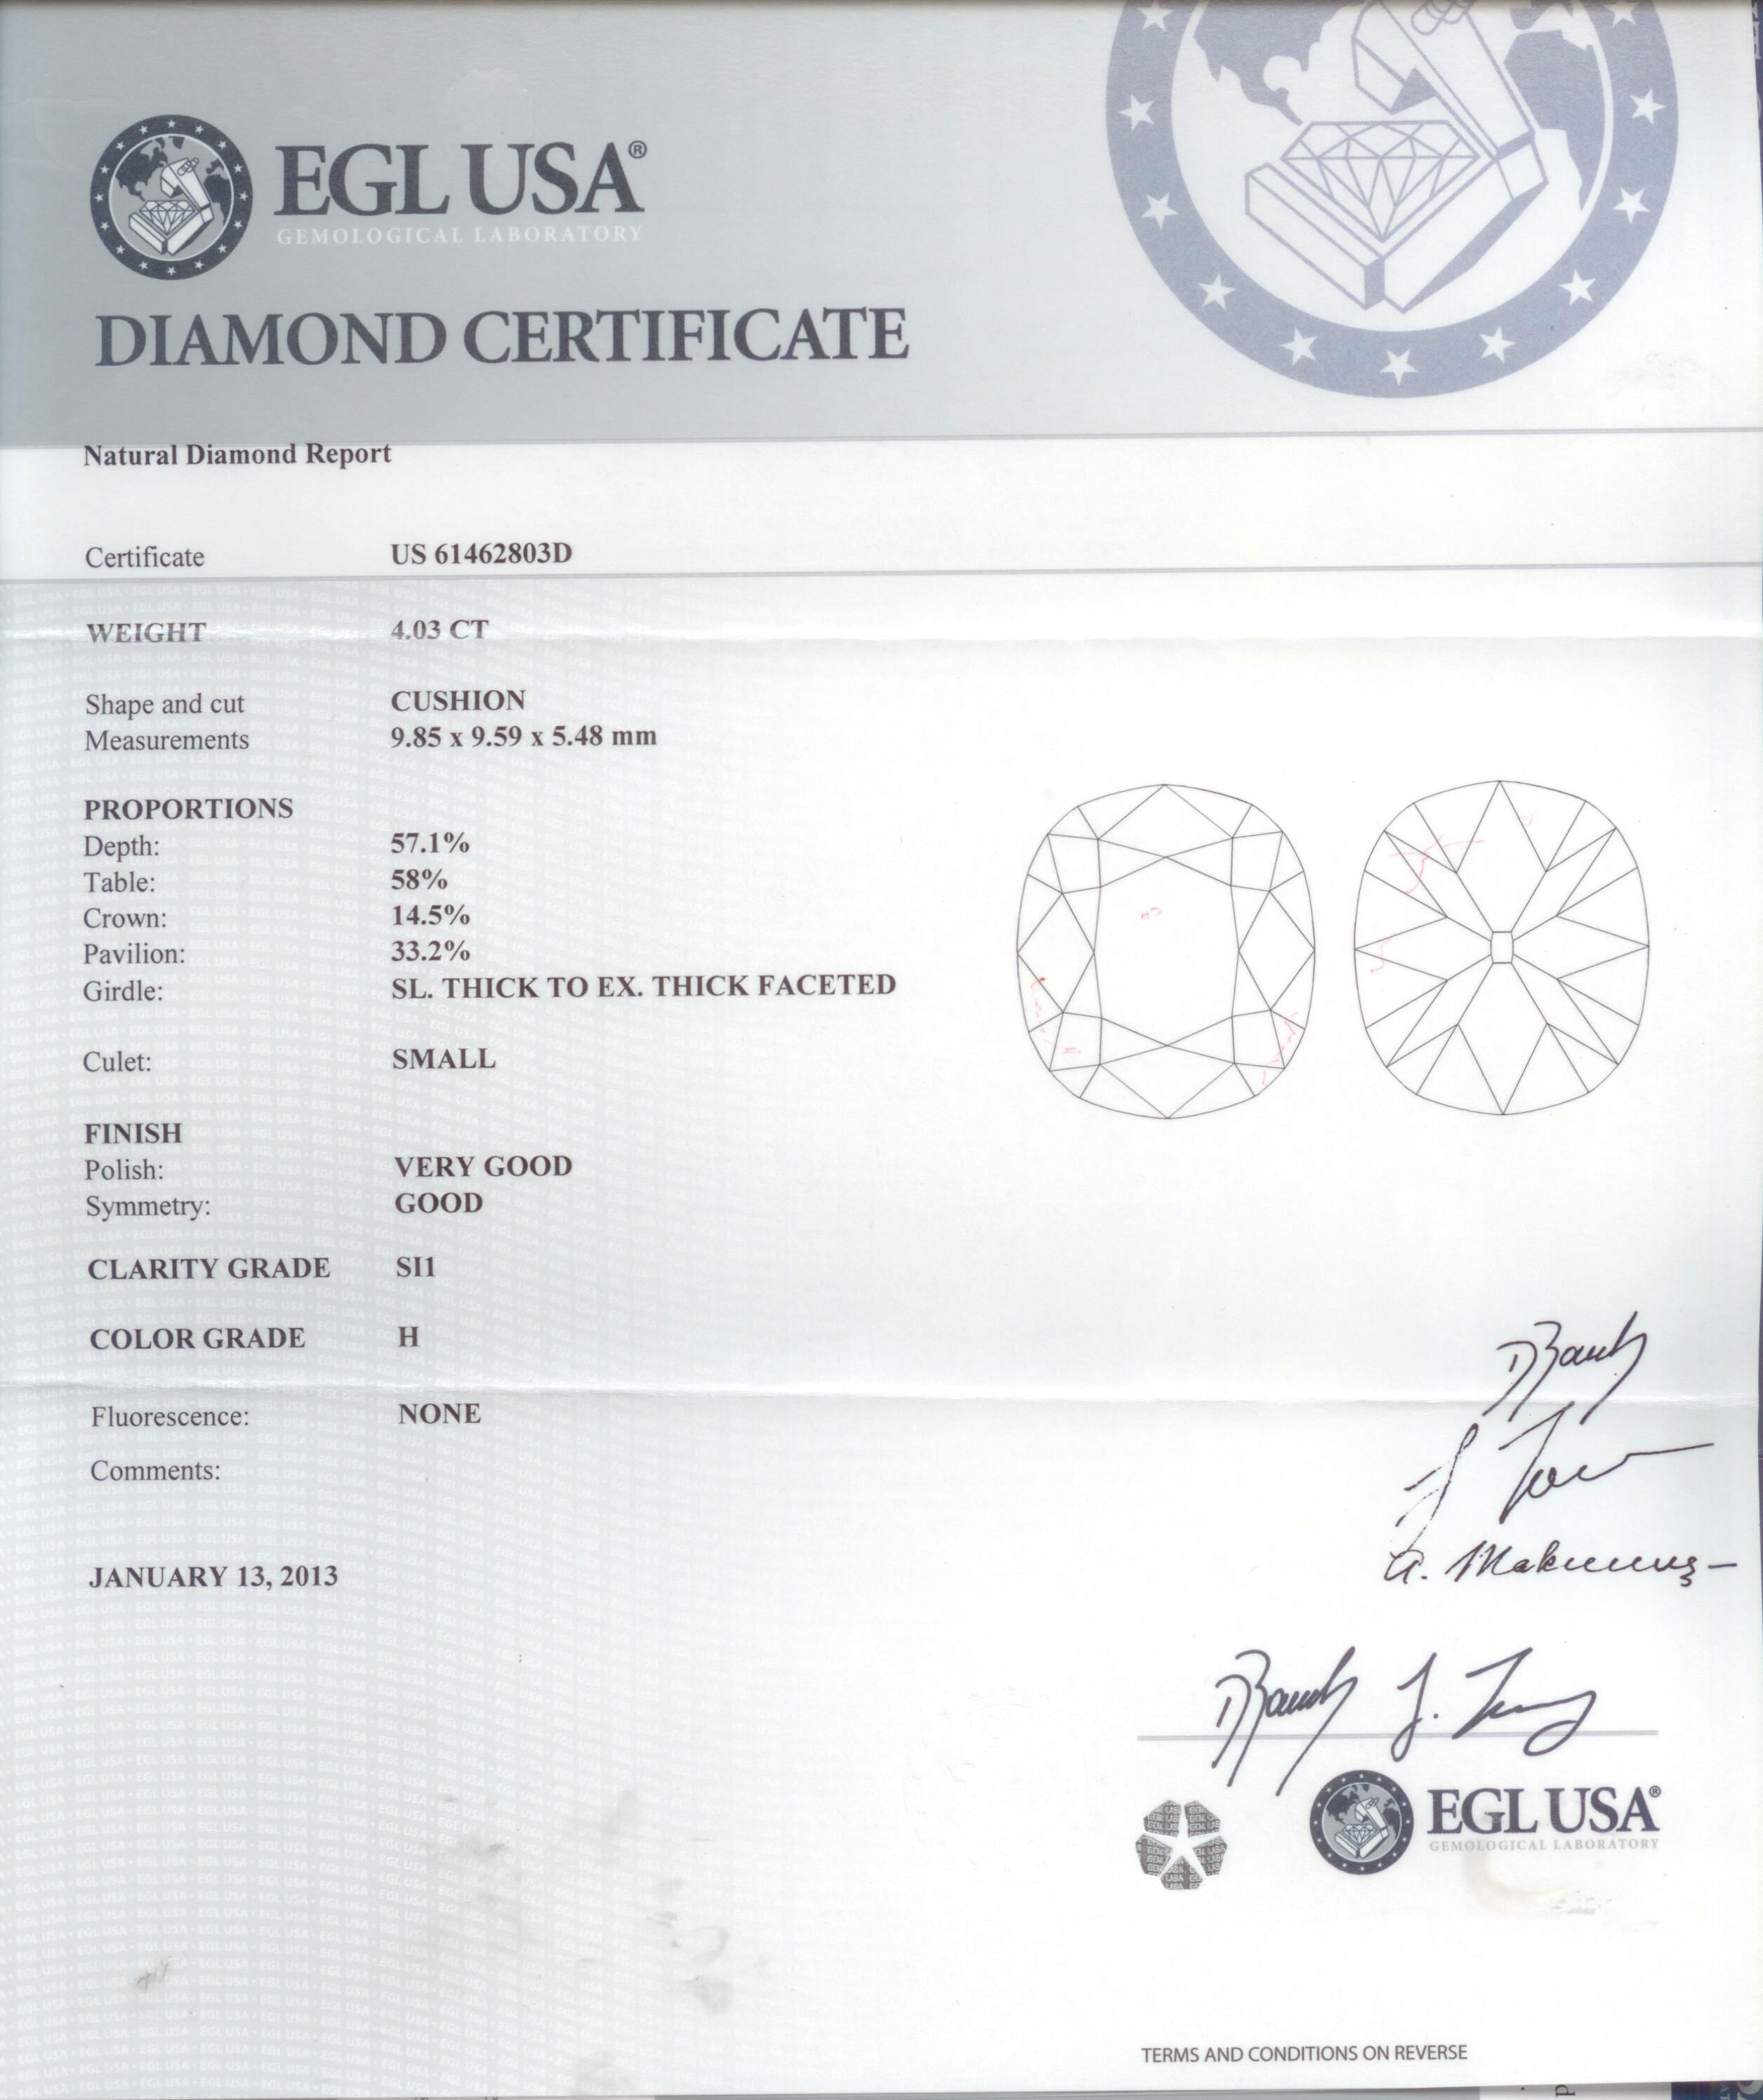 Henri Daussi Platinum Certified Diamond Engagement Ring With Cushion 4.97ct tw